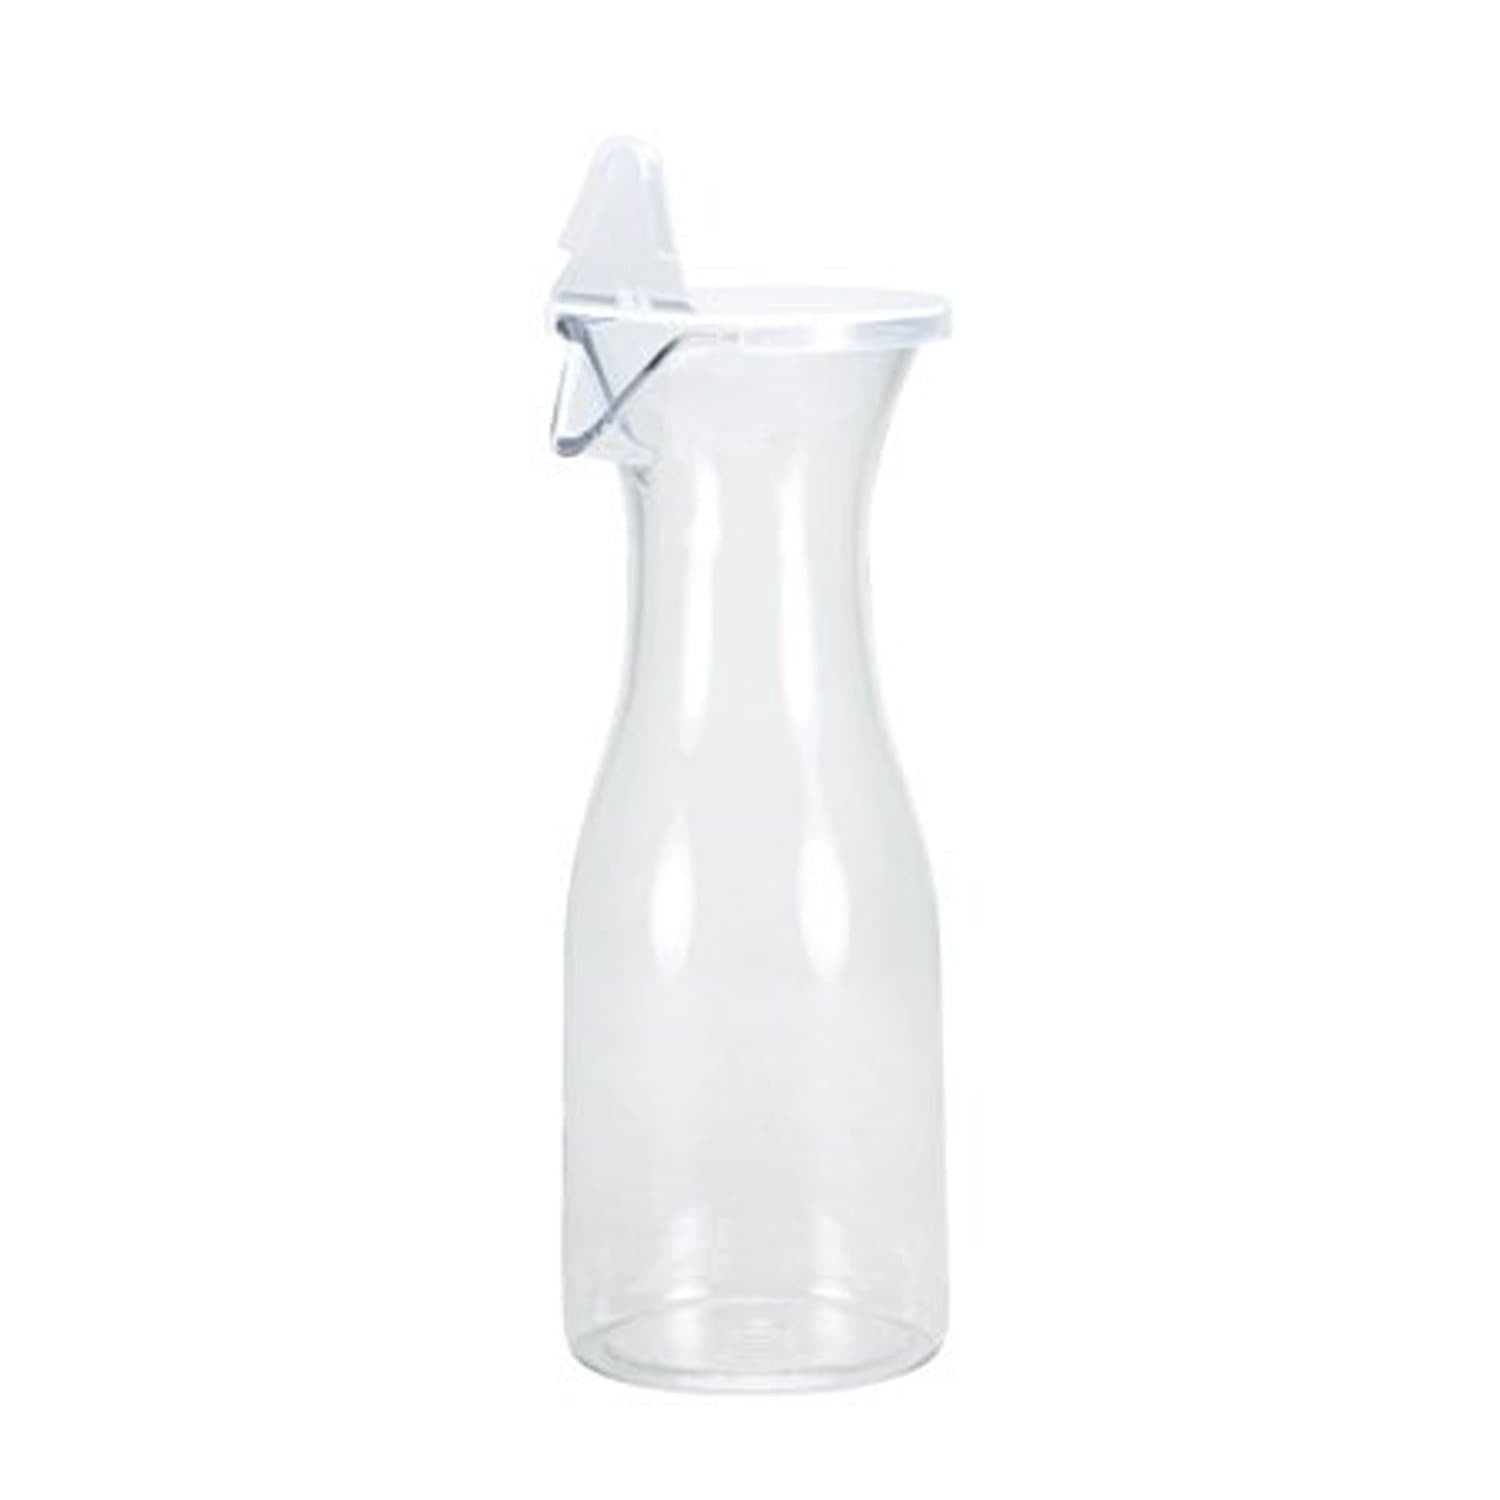 Choice 48 oz. Clear SAN Plastic Beverage Pitcher